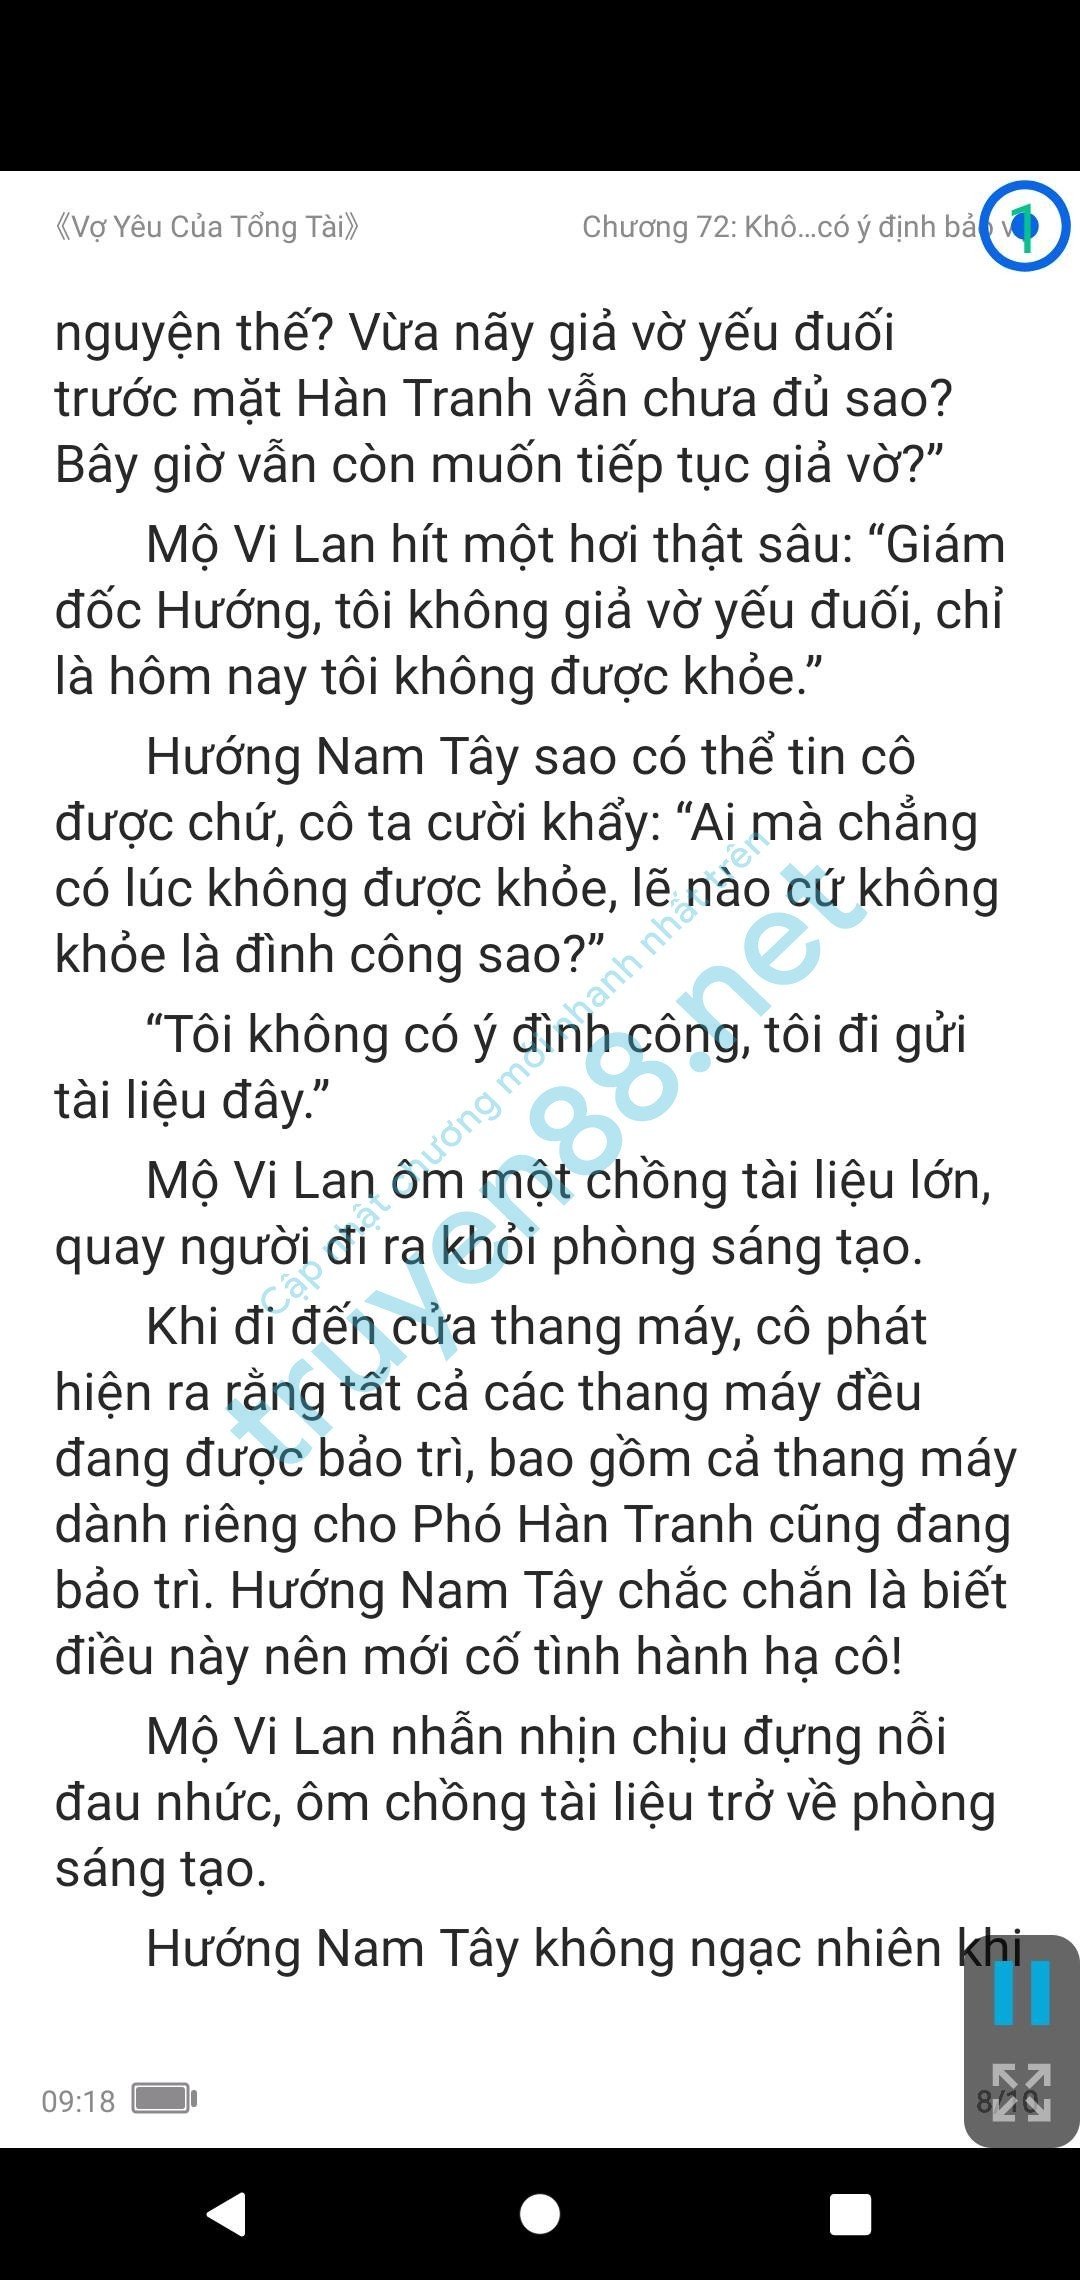 vo-yeu-cua-tong-tai-mo-vi-lan--pho-han-tranh-72-0